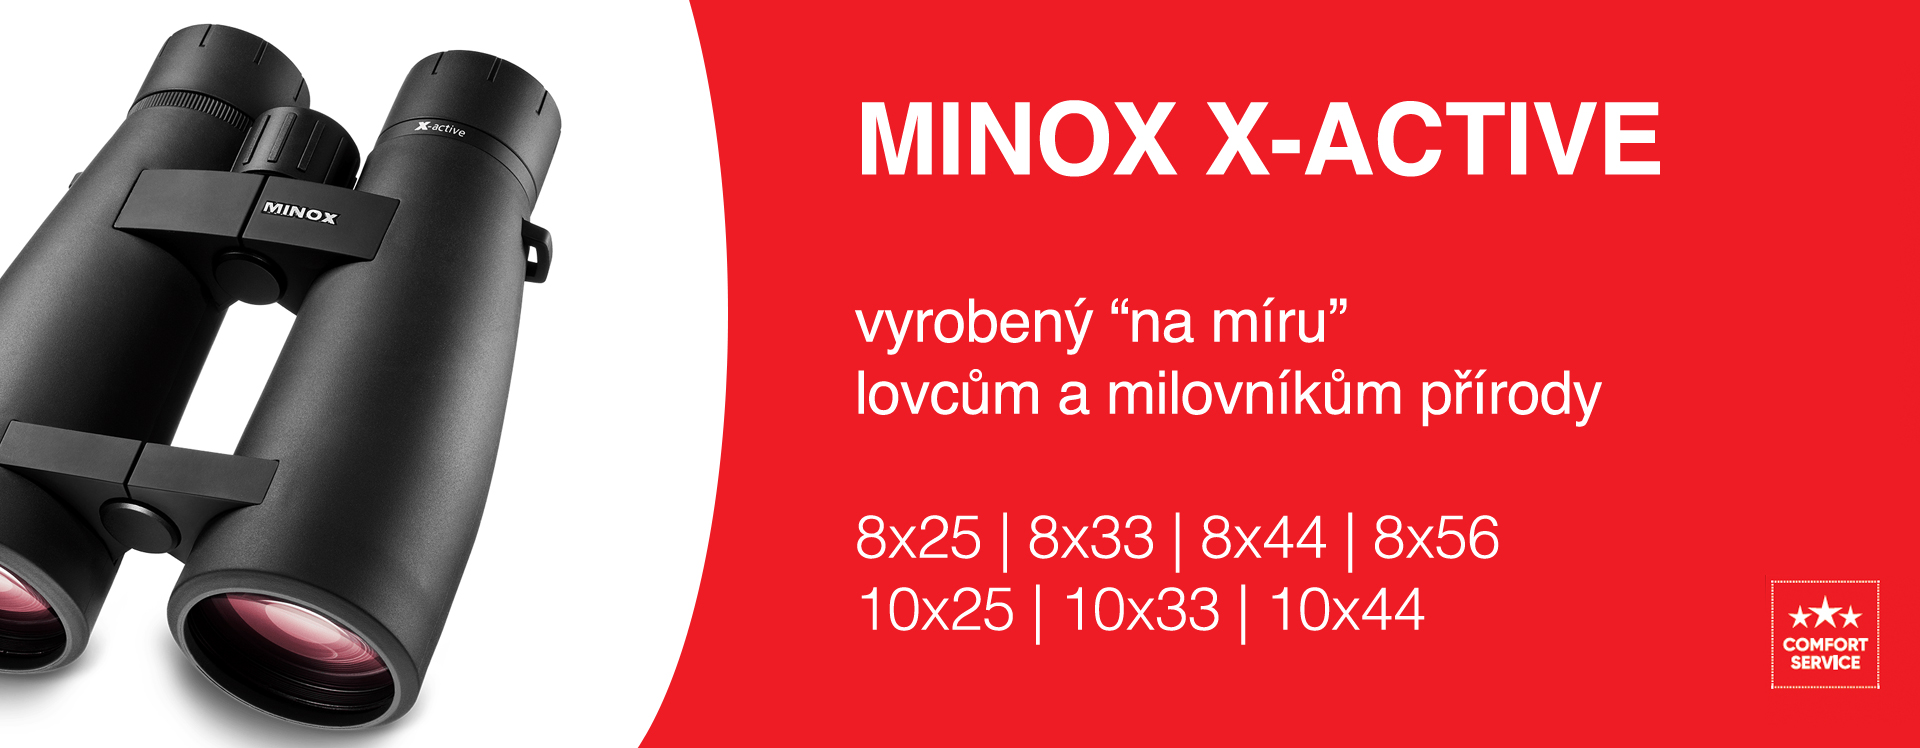 Minox X-Active